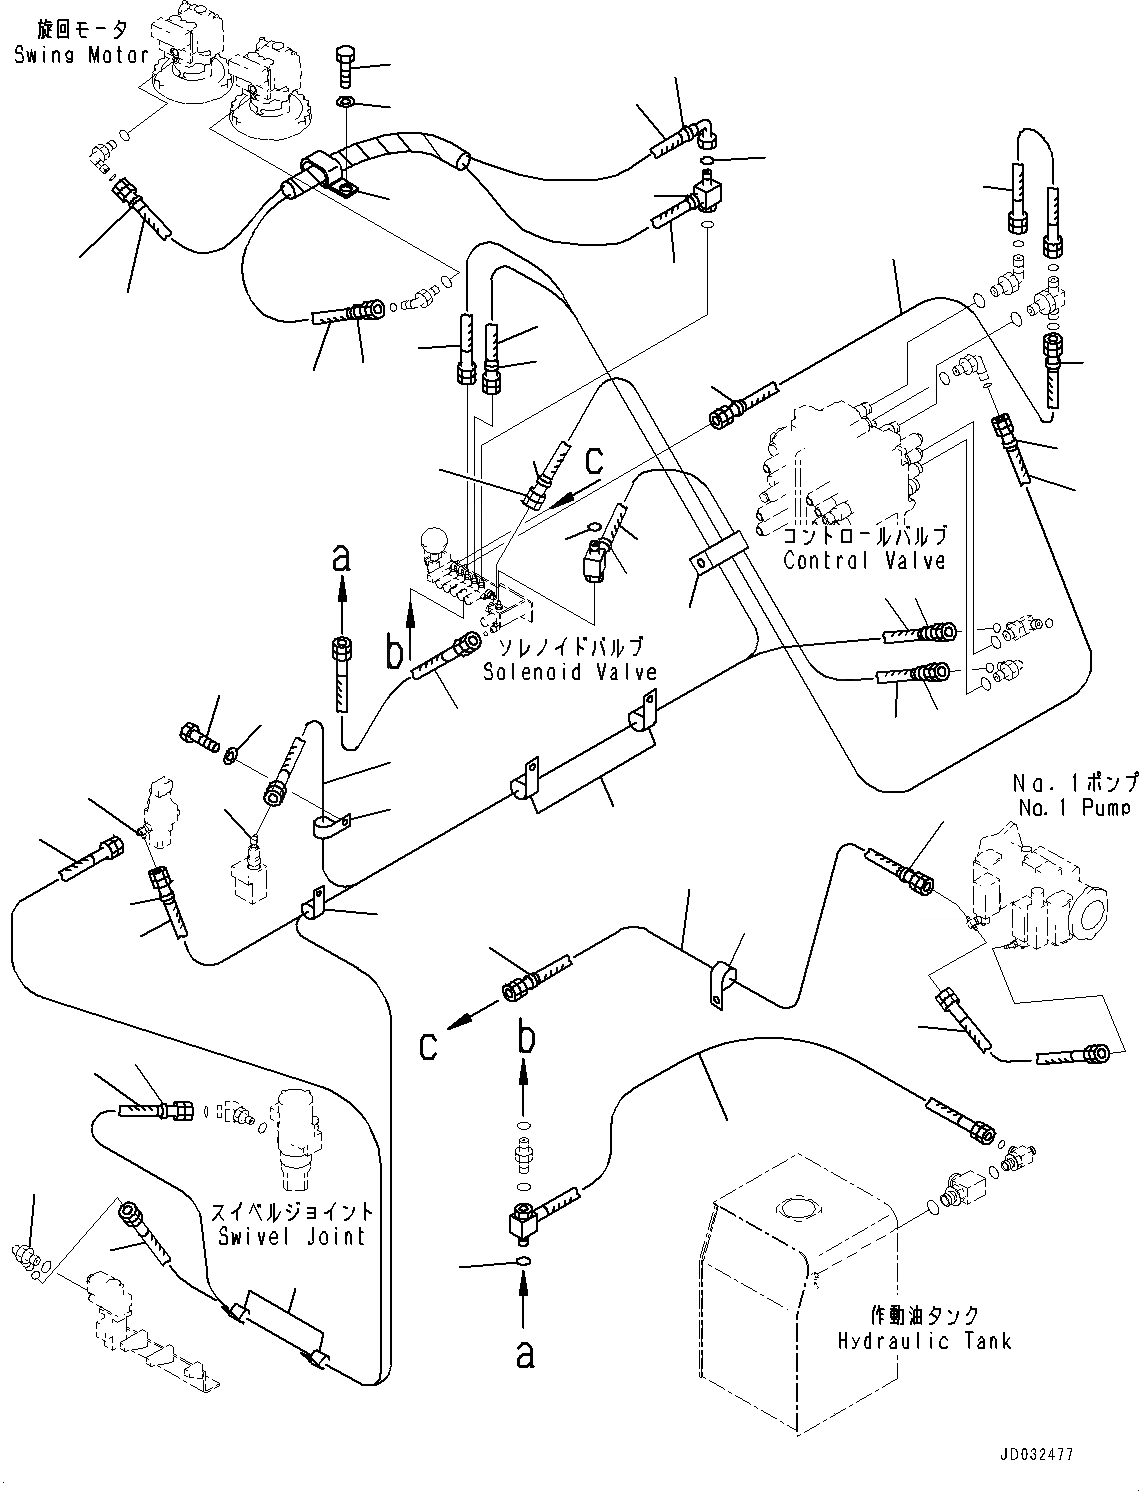 Схема запчастей Komatsu PC600-8E0 - СОЛЕНОИДНЫЙ КЛАПАН ТРУБЫ, ШЛАНГИ (№-) СОЛЕНОИДНЫЙ КЛАПАН ТРУБЫ, PROVISION ДЛЯ -АКТУАТОР